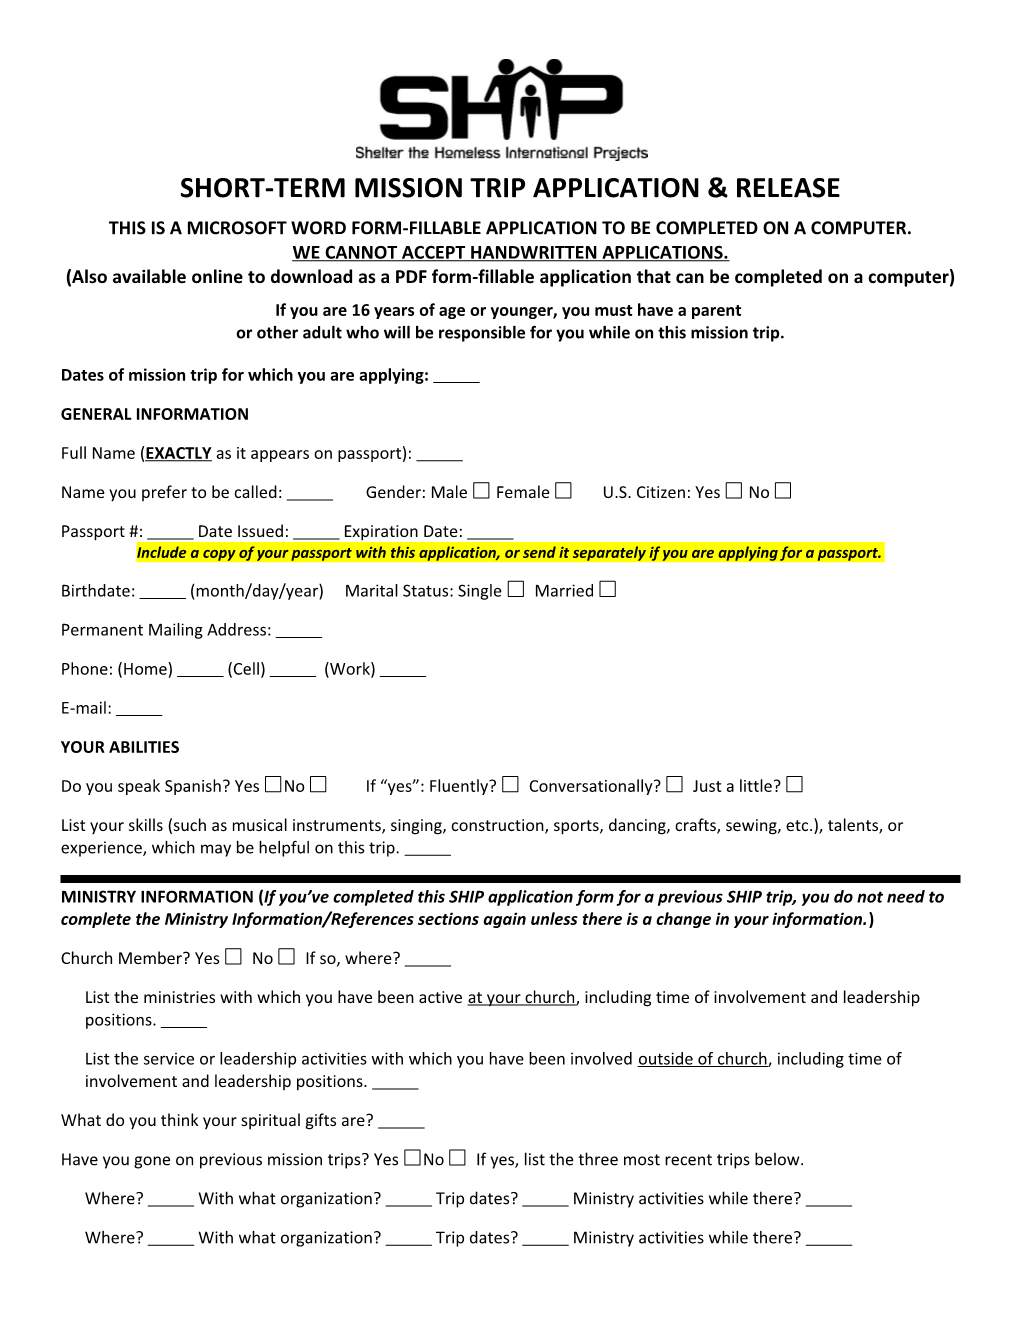 Short-Term Mission Trip Application & Release